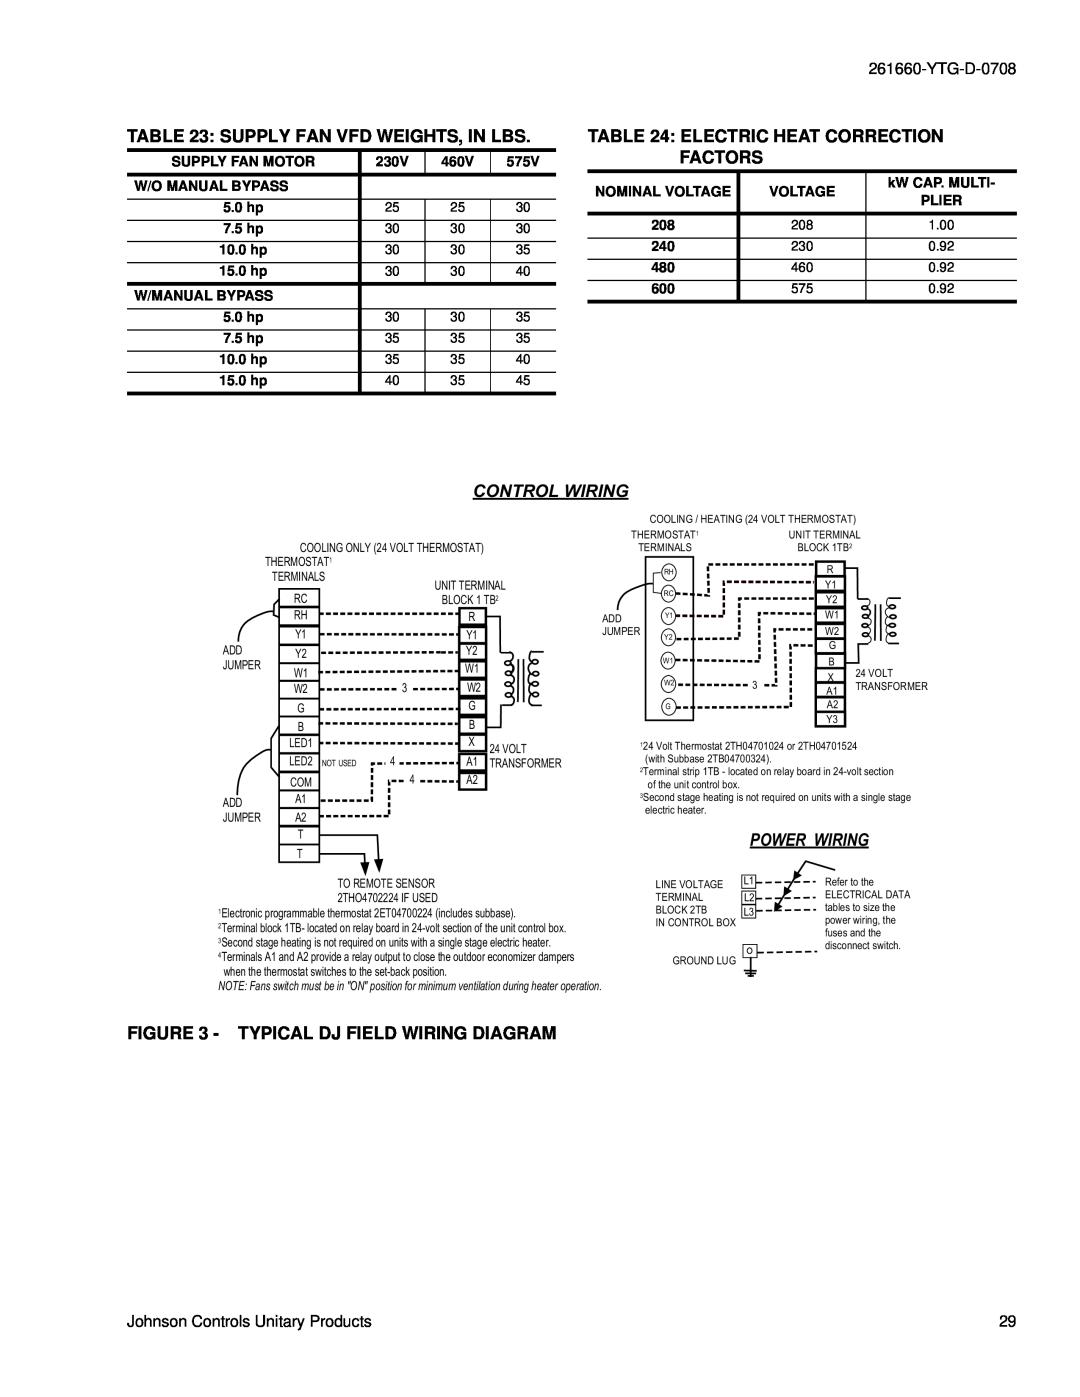 York DJ 300, DJ 210 Supply Fan Vfd Weights, In Lbs, Electric Heat Correction Factors, Typical Dj Field Wiring Diagram 